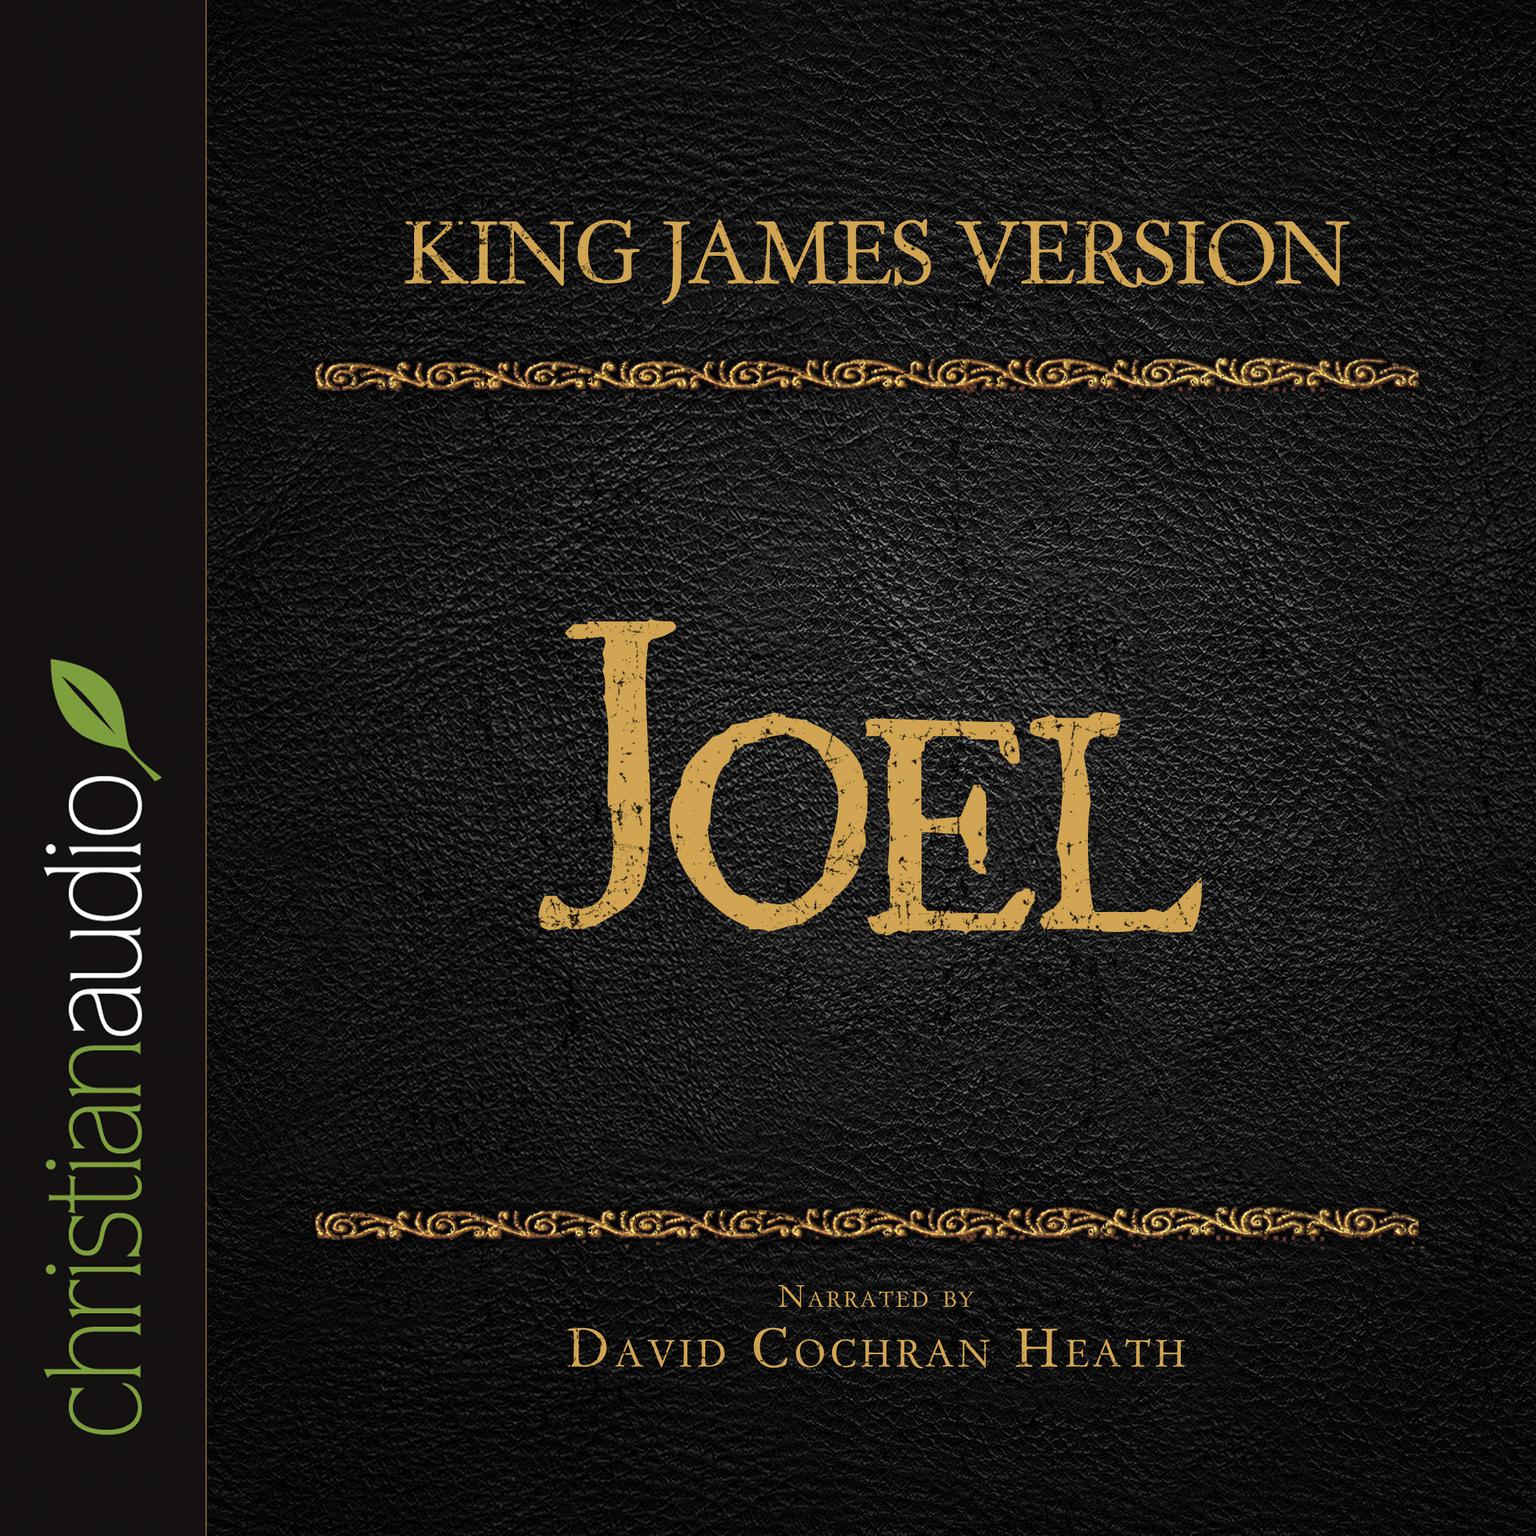 Holy Bible in Audio - King James Version: Joel Audiobook, by David Cochran Heath